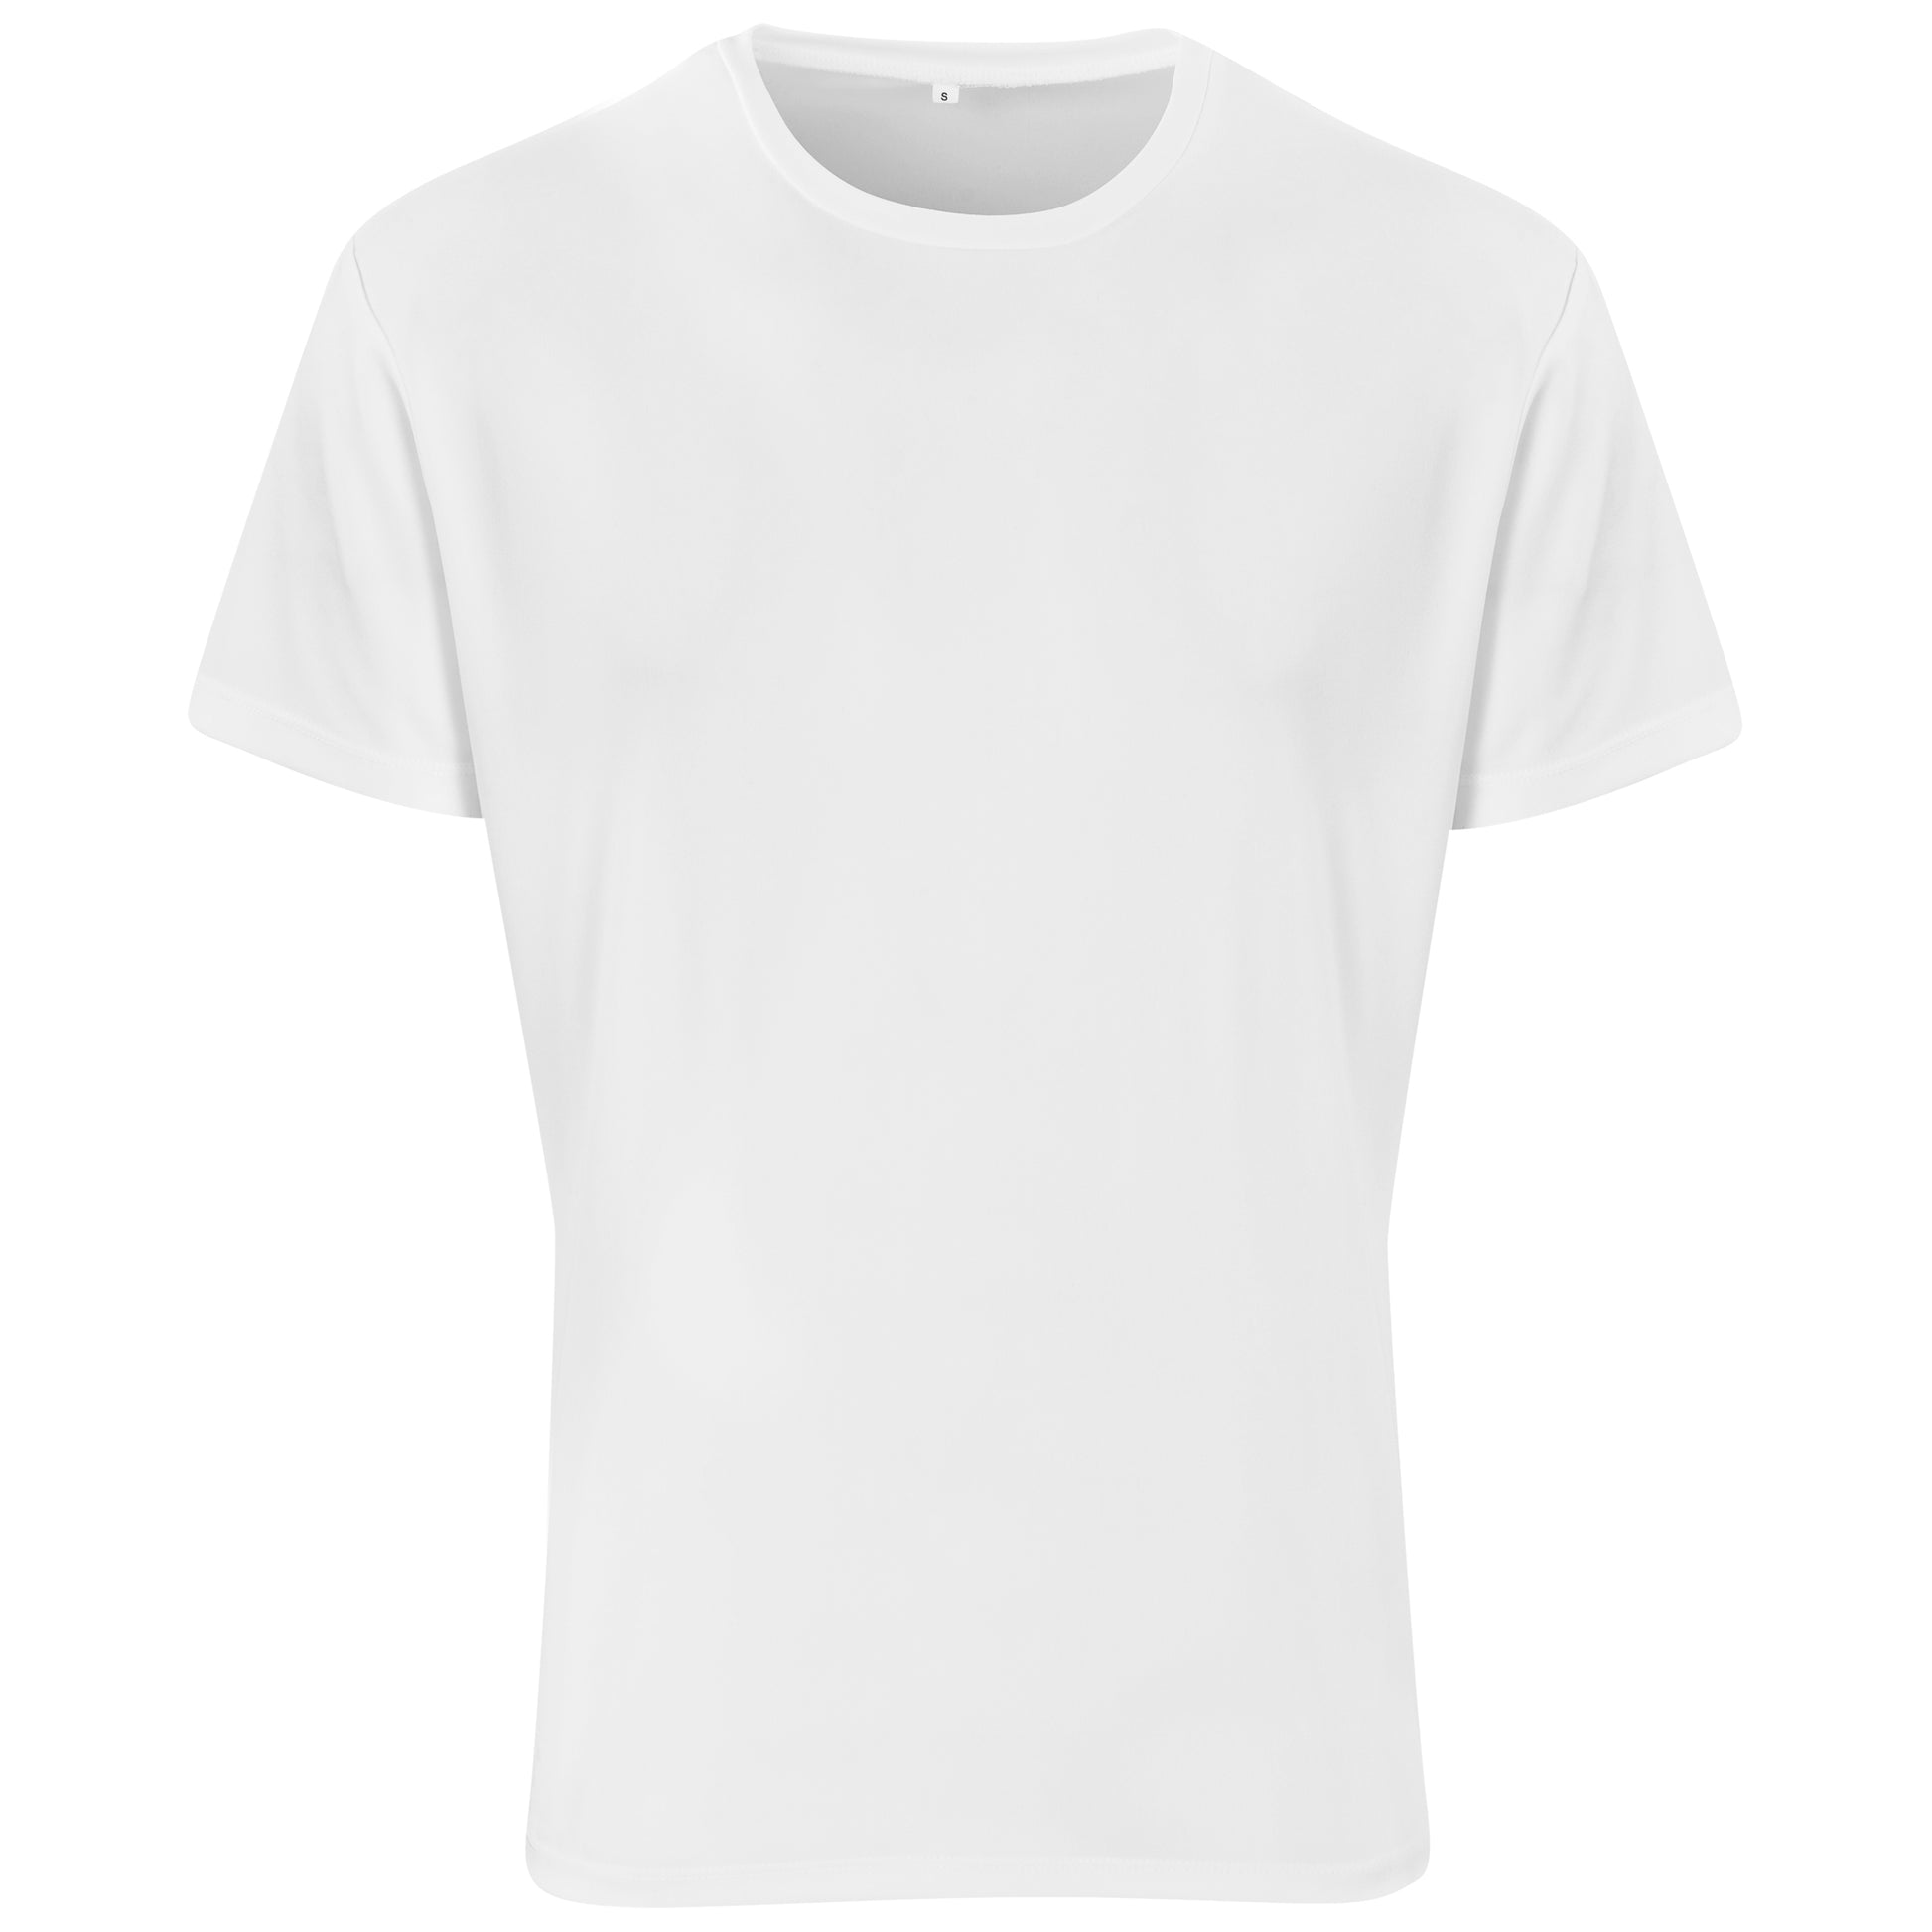 Unisex Activ T-shirt (TS-AL-59-A)